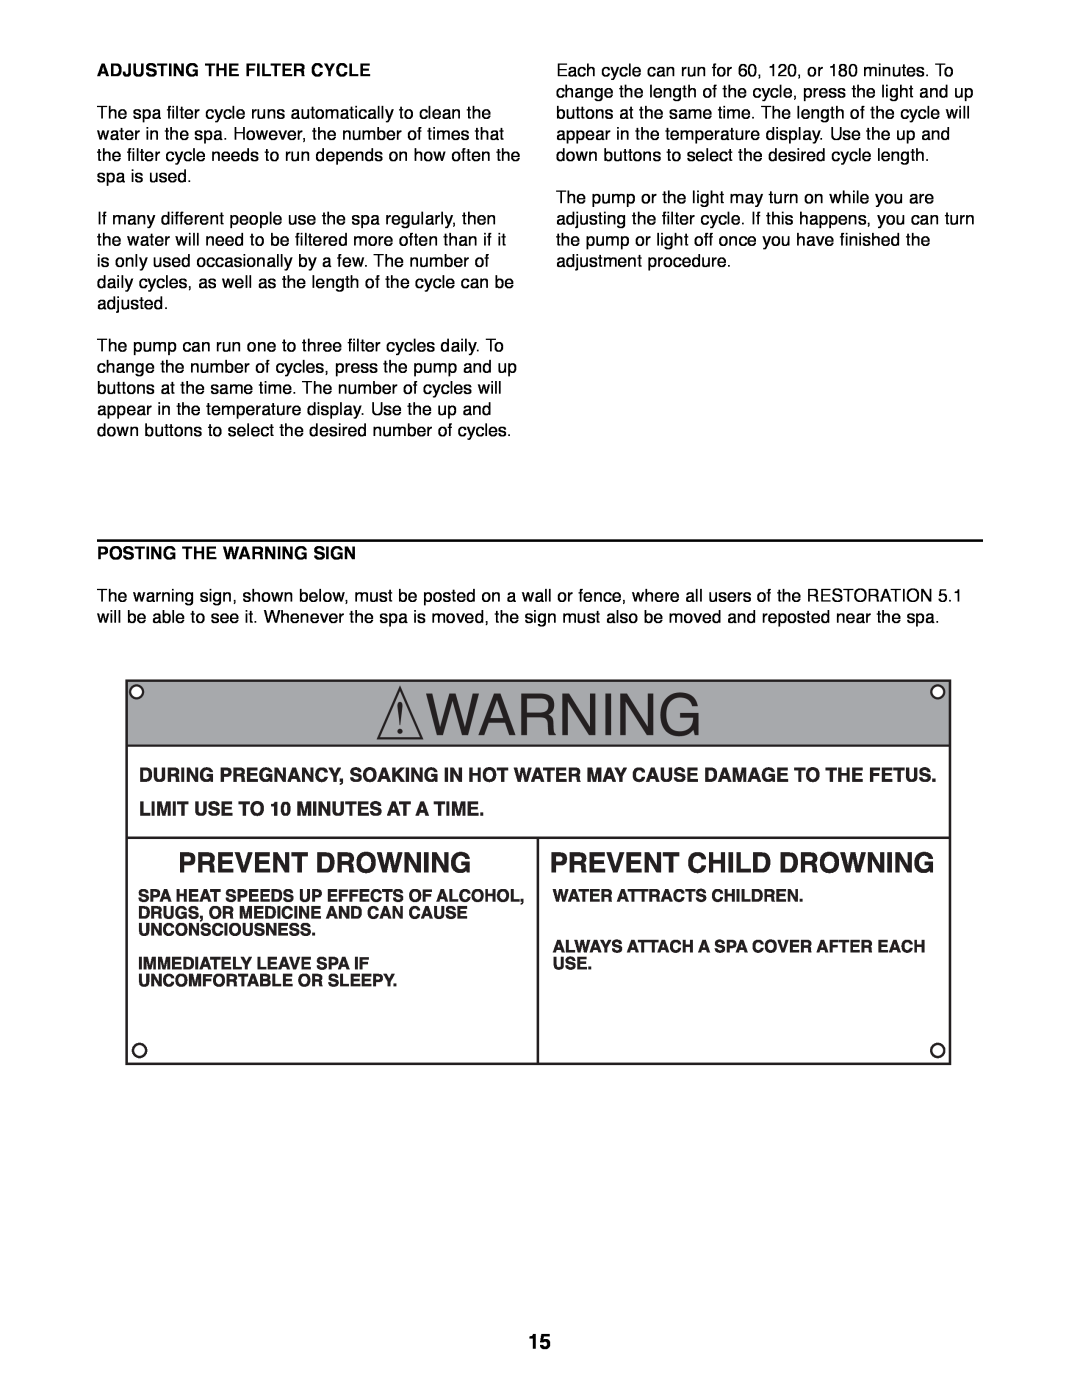 ProForm 831.210051 manual Adjusting The Filter Cycle, Posting The Warning Sign 